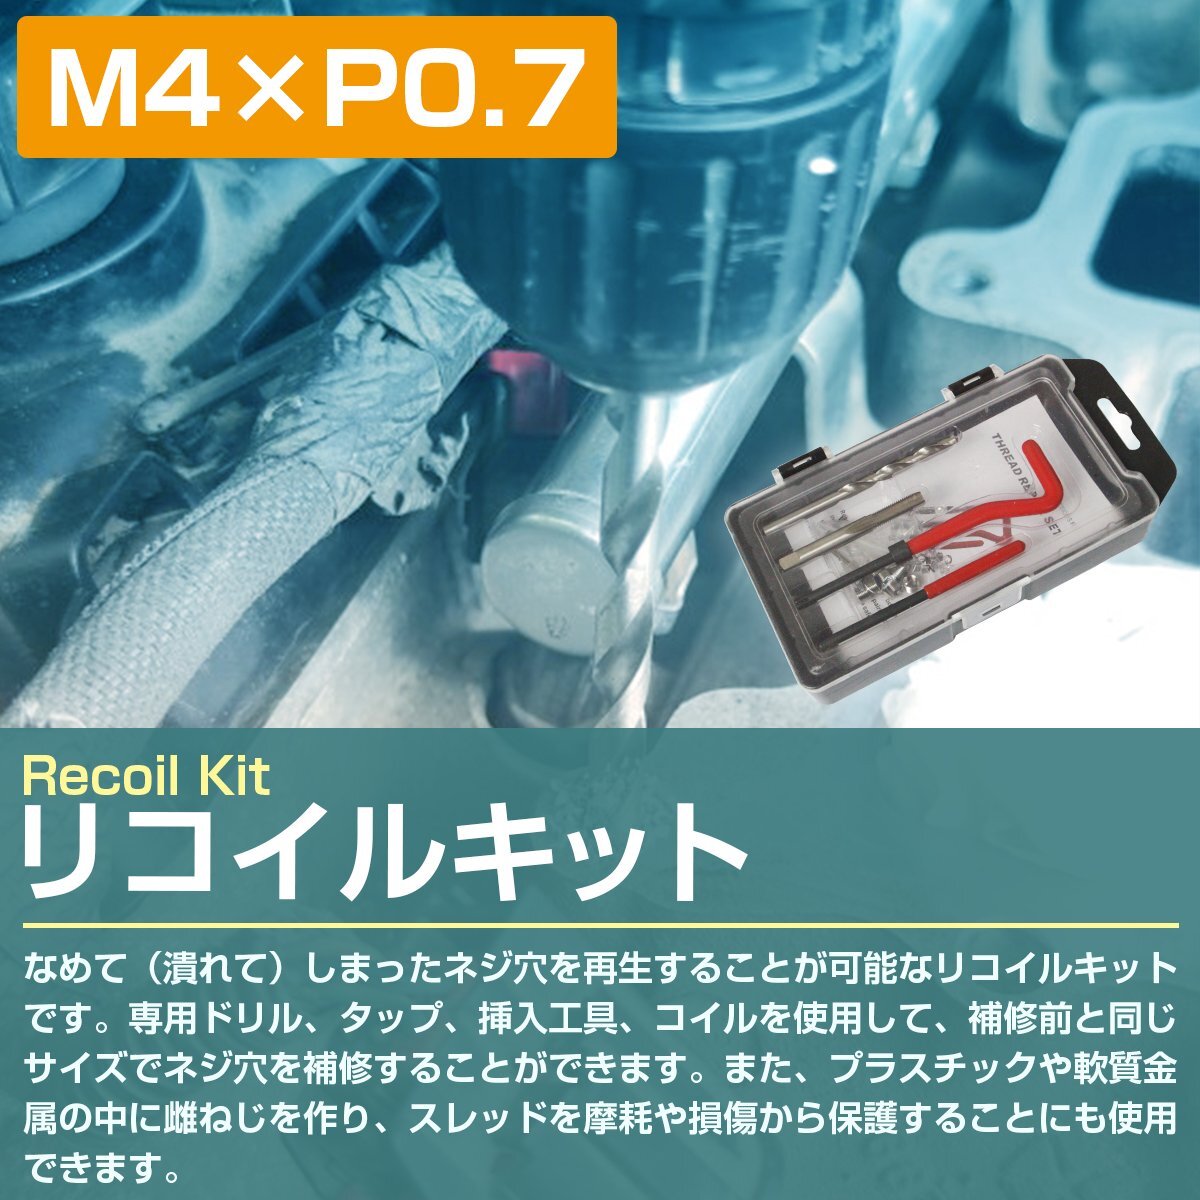 【M4×P0.7】リコイルキット ネジ 山 修正 ドリル付き めねじ 再生 ねじ 穴 修復 補強 耐久性向上 雌ネジ 補修 工具 セットの画像2